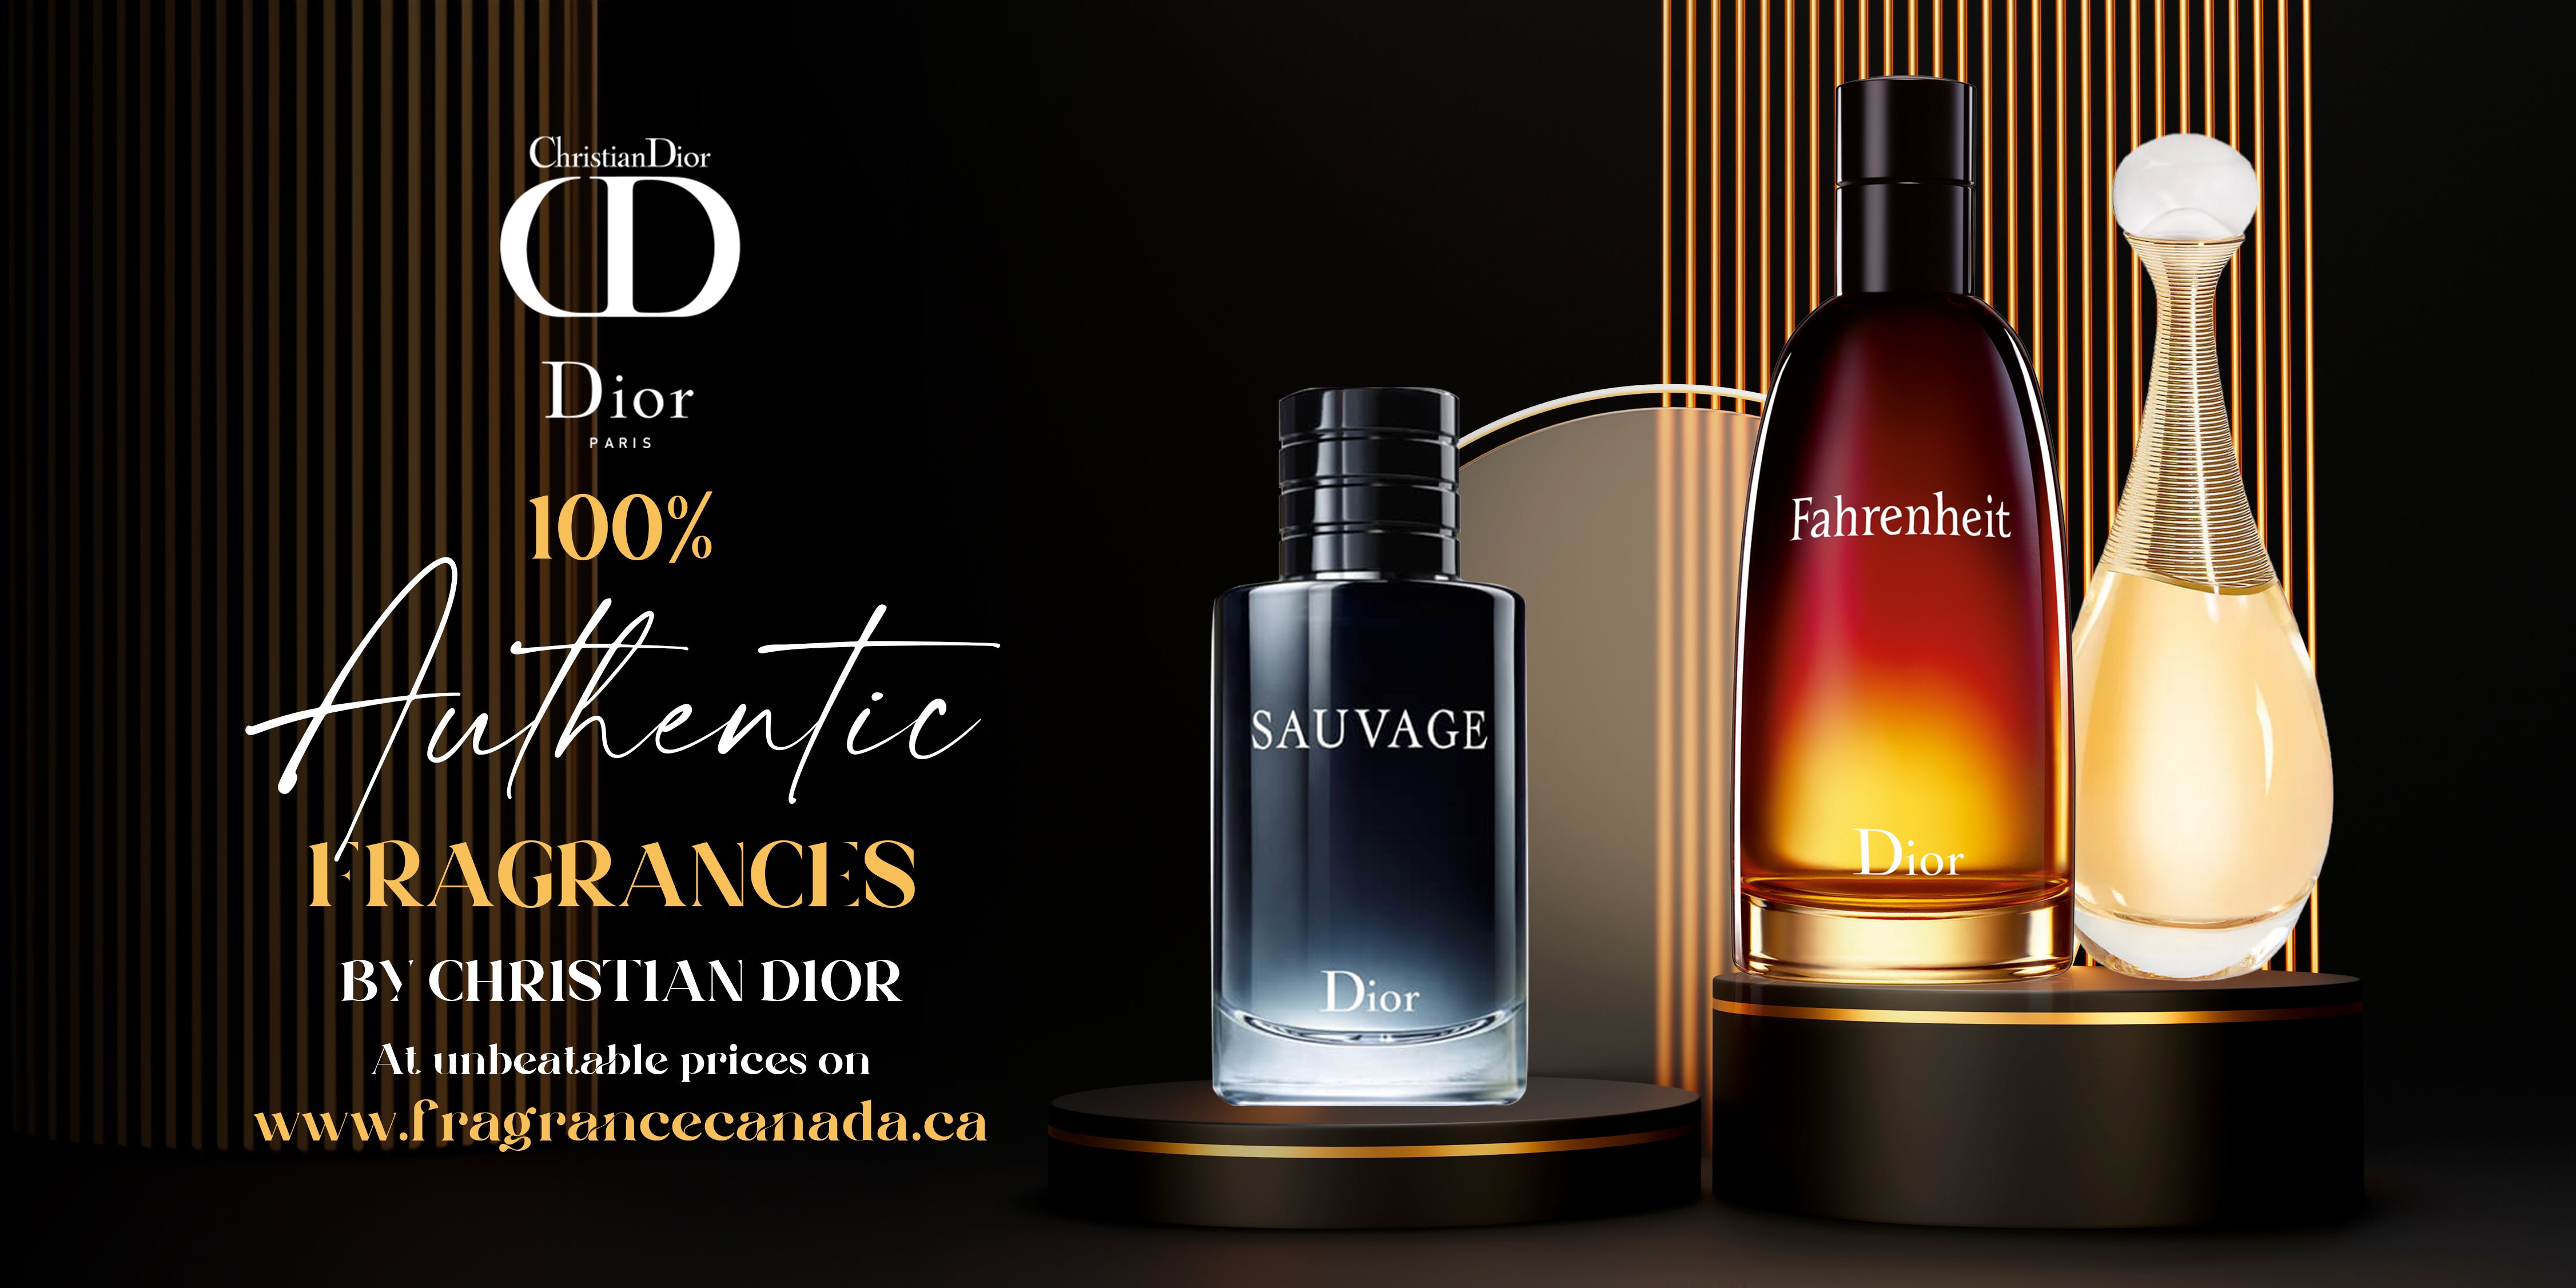 dior perfume ads